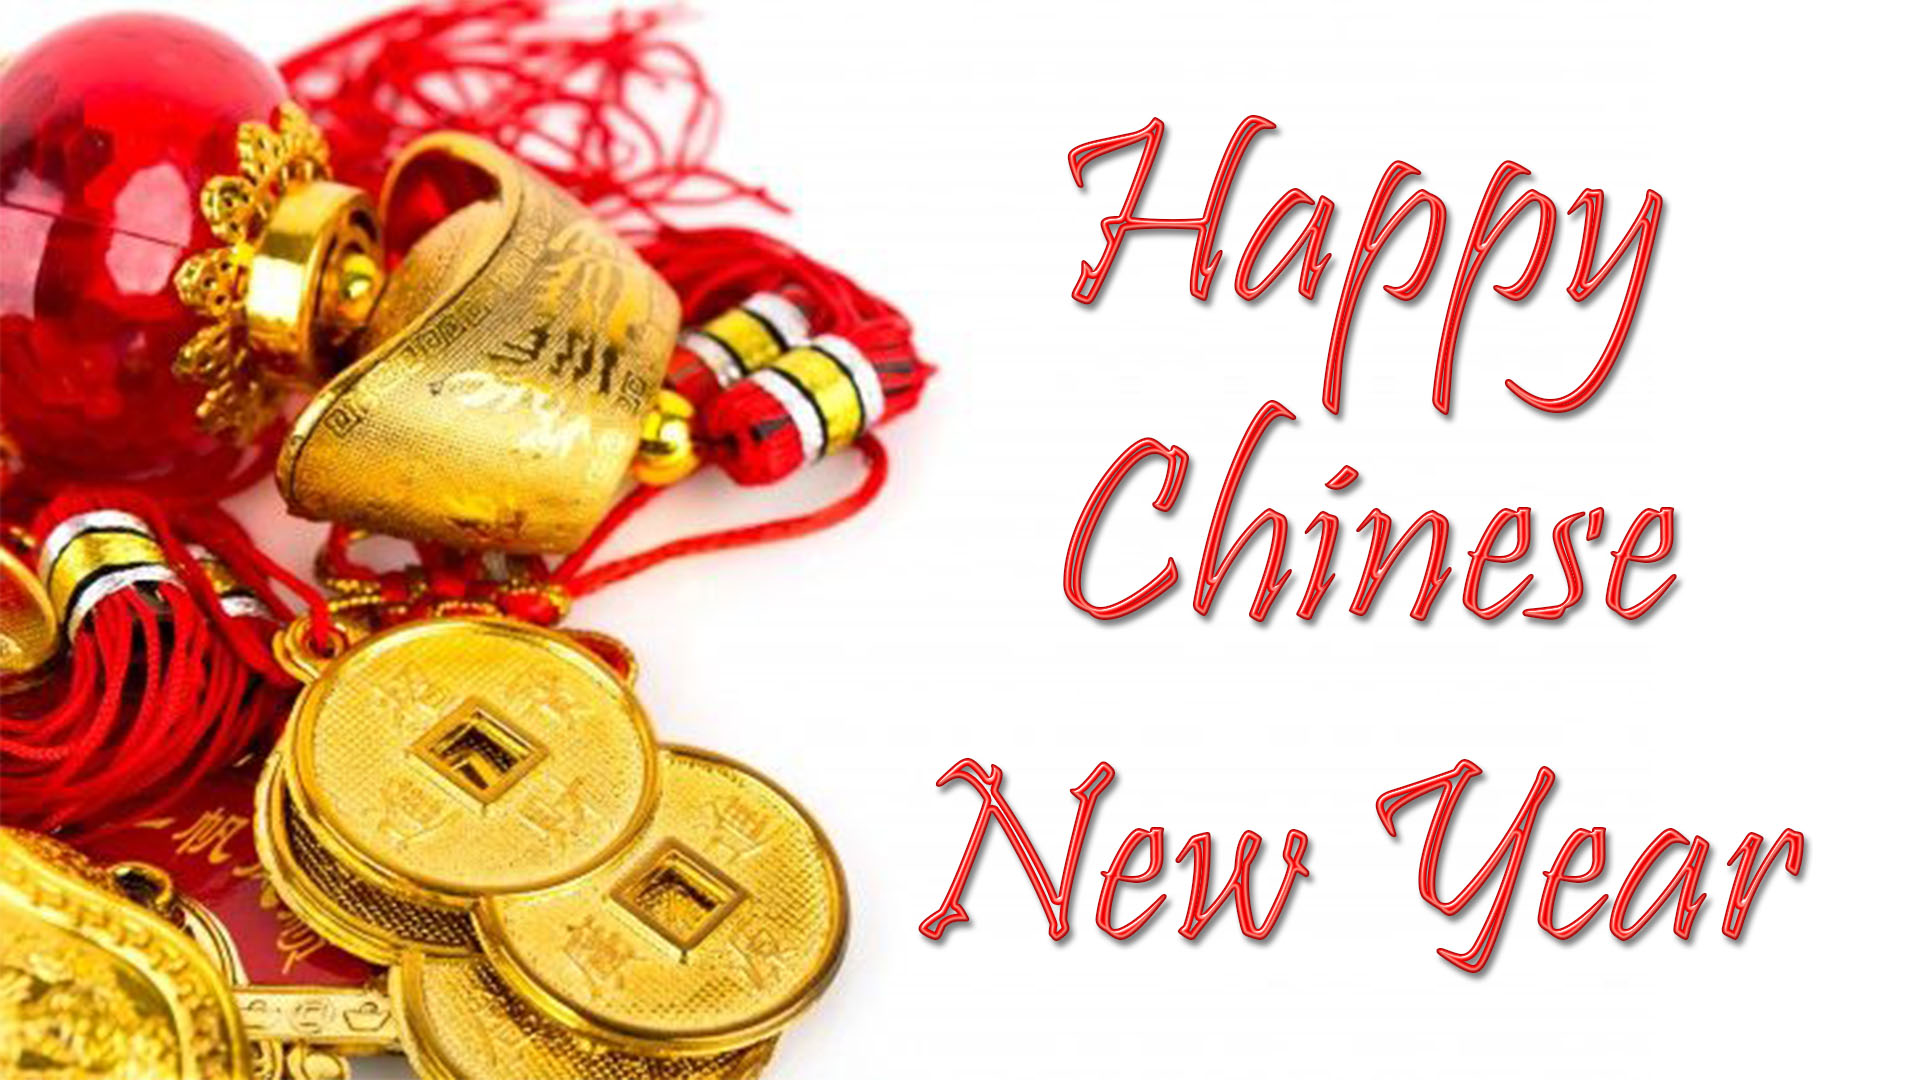 chinese new year greeting image